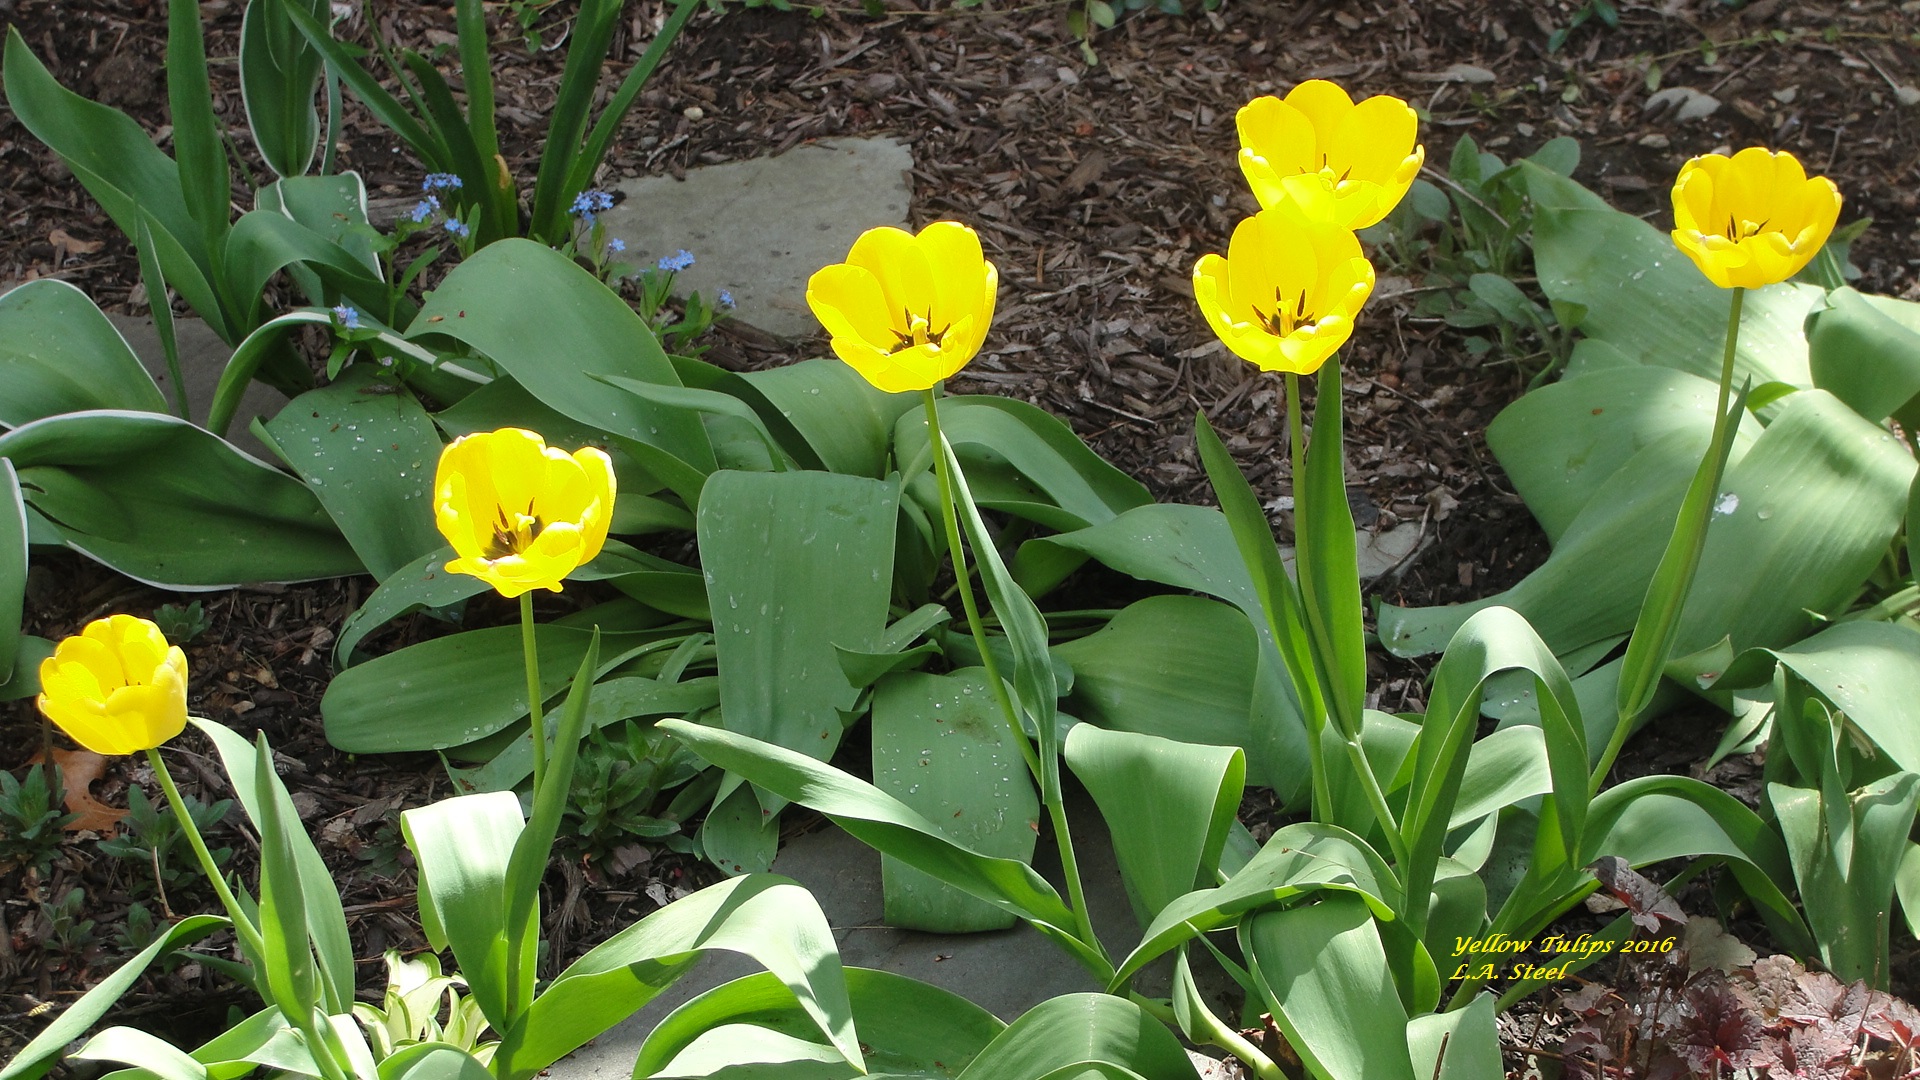 yellow tulips 2016